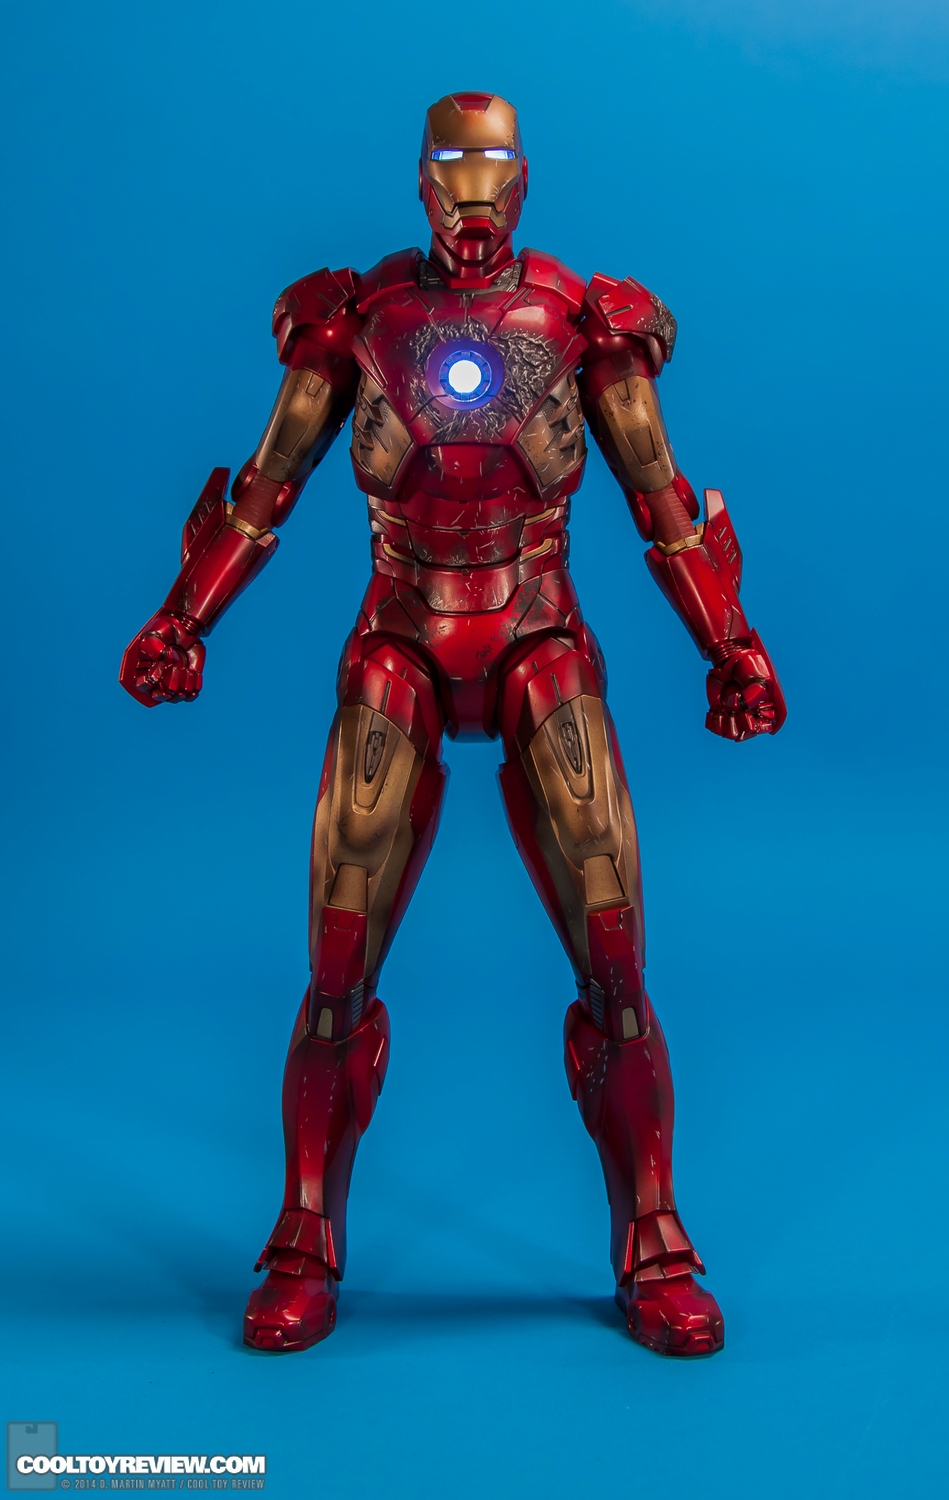 Iron-Man-Mark-VII-Battle-Damaged-Avengers-Hot-Toys-001.jpg